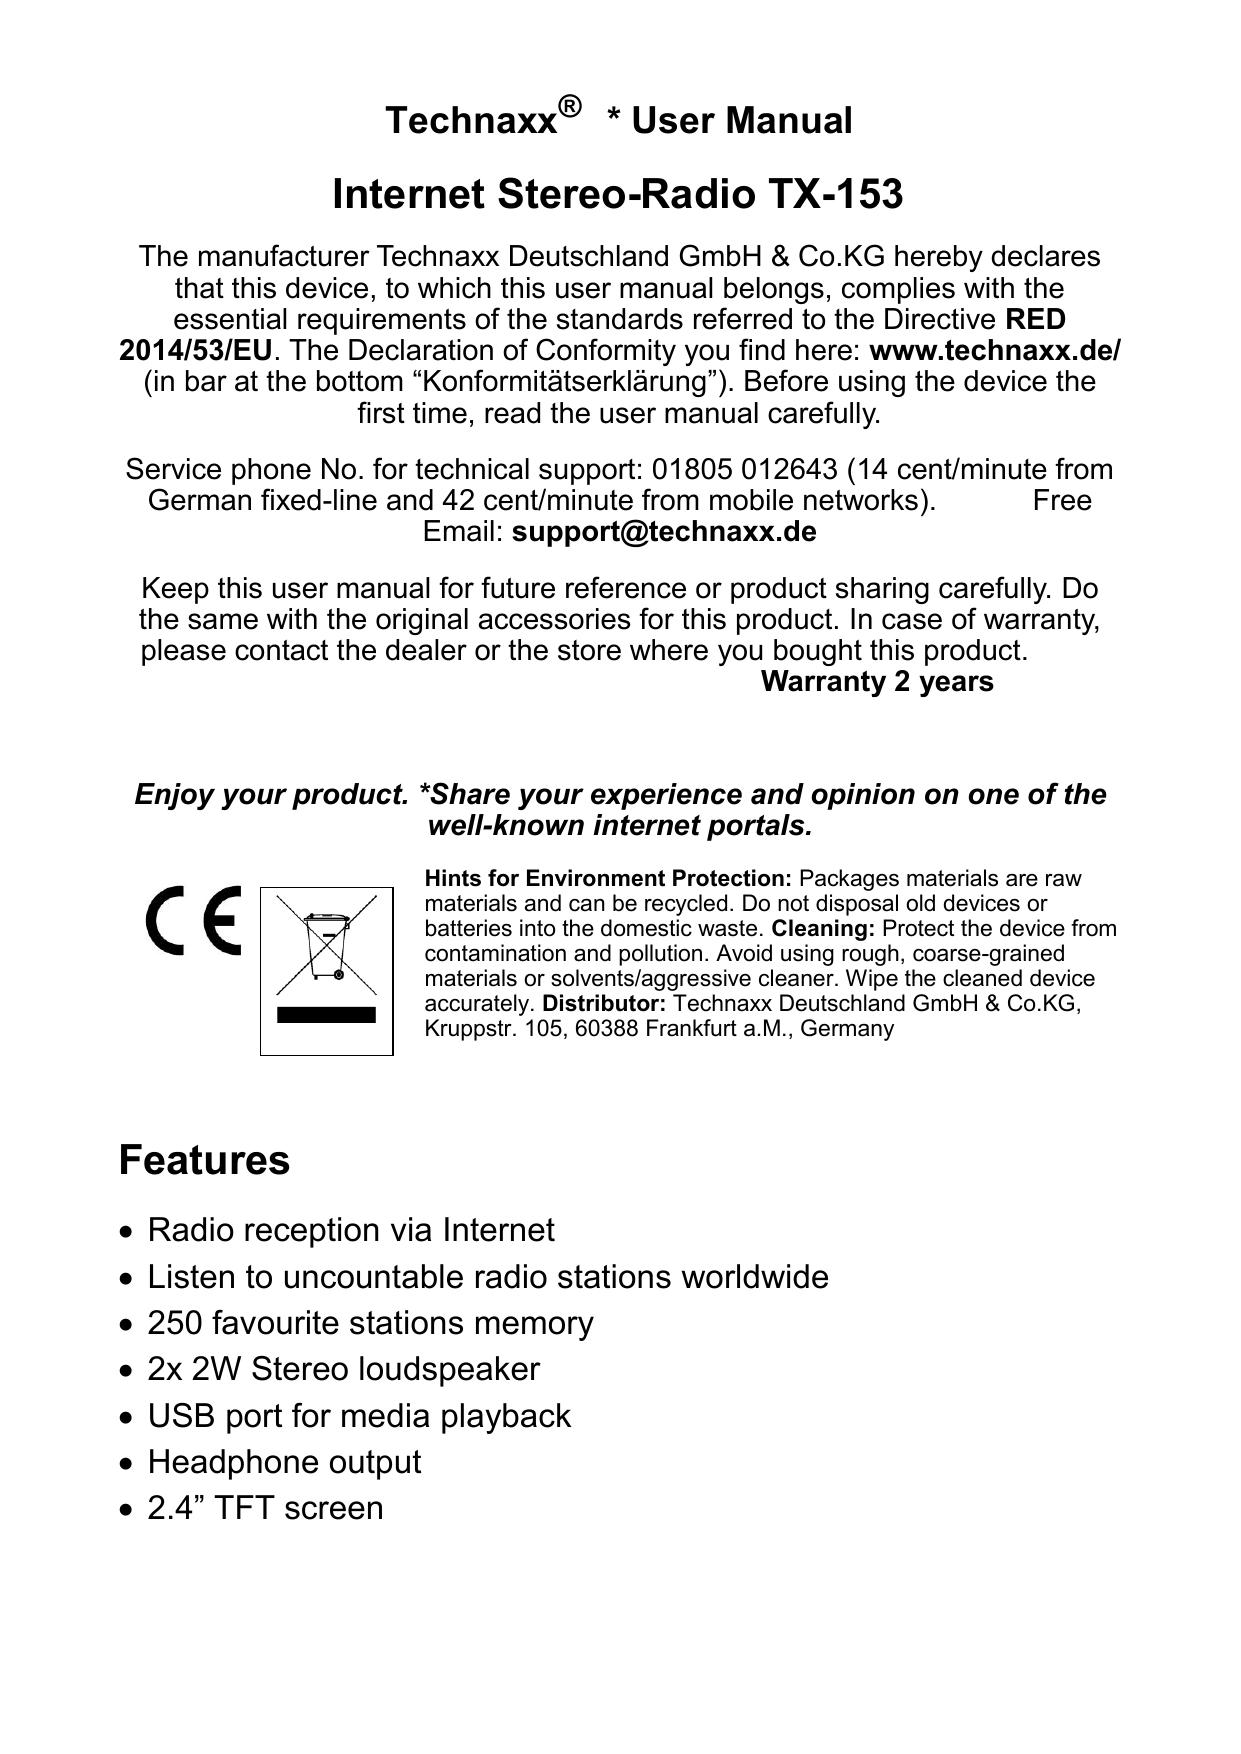 Technaxx TX-153 Internetradio Owner's Manual | Manualzz